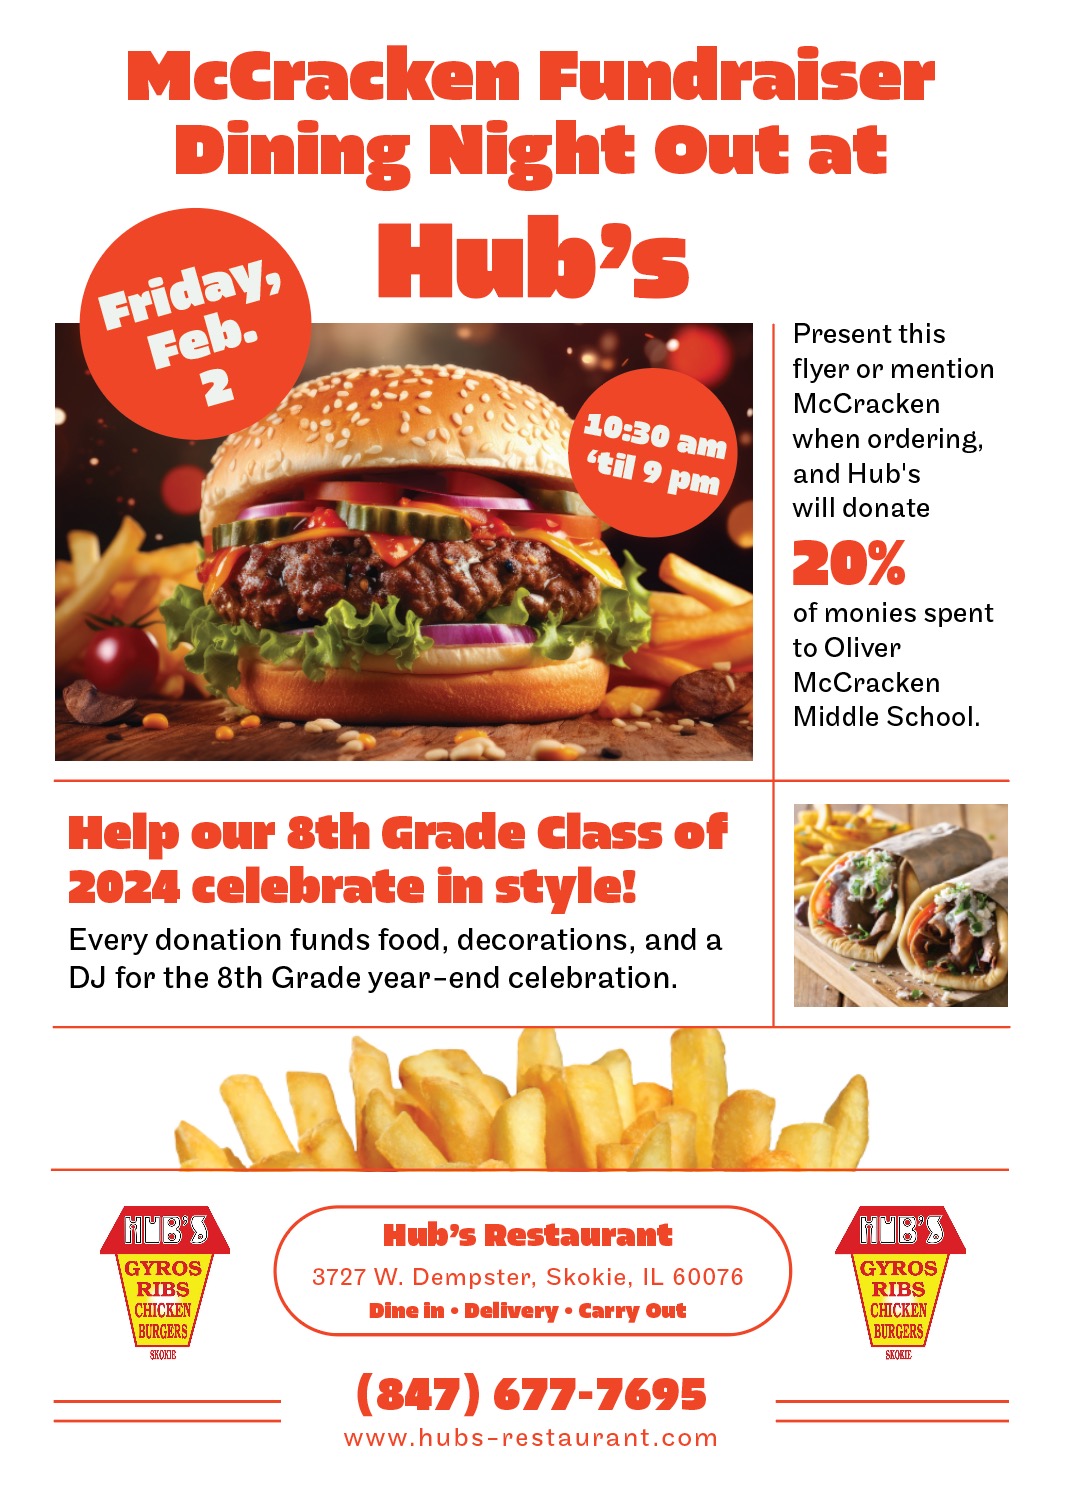 McCracken HUB's Dine Out Fundraiser flyer